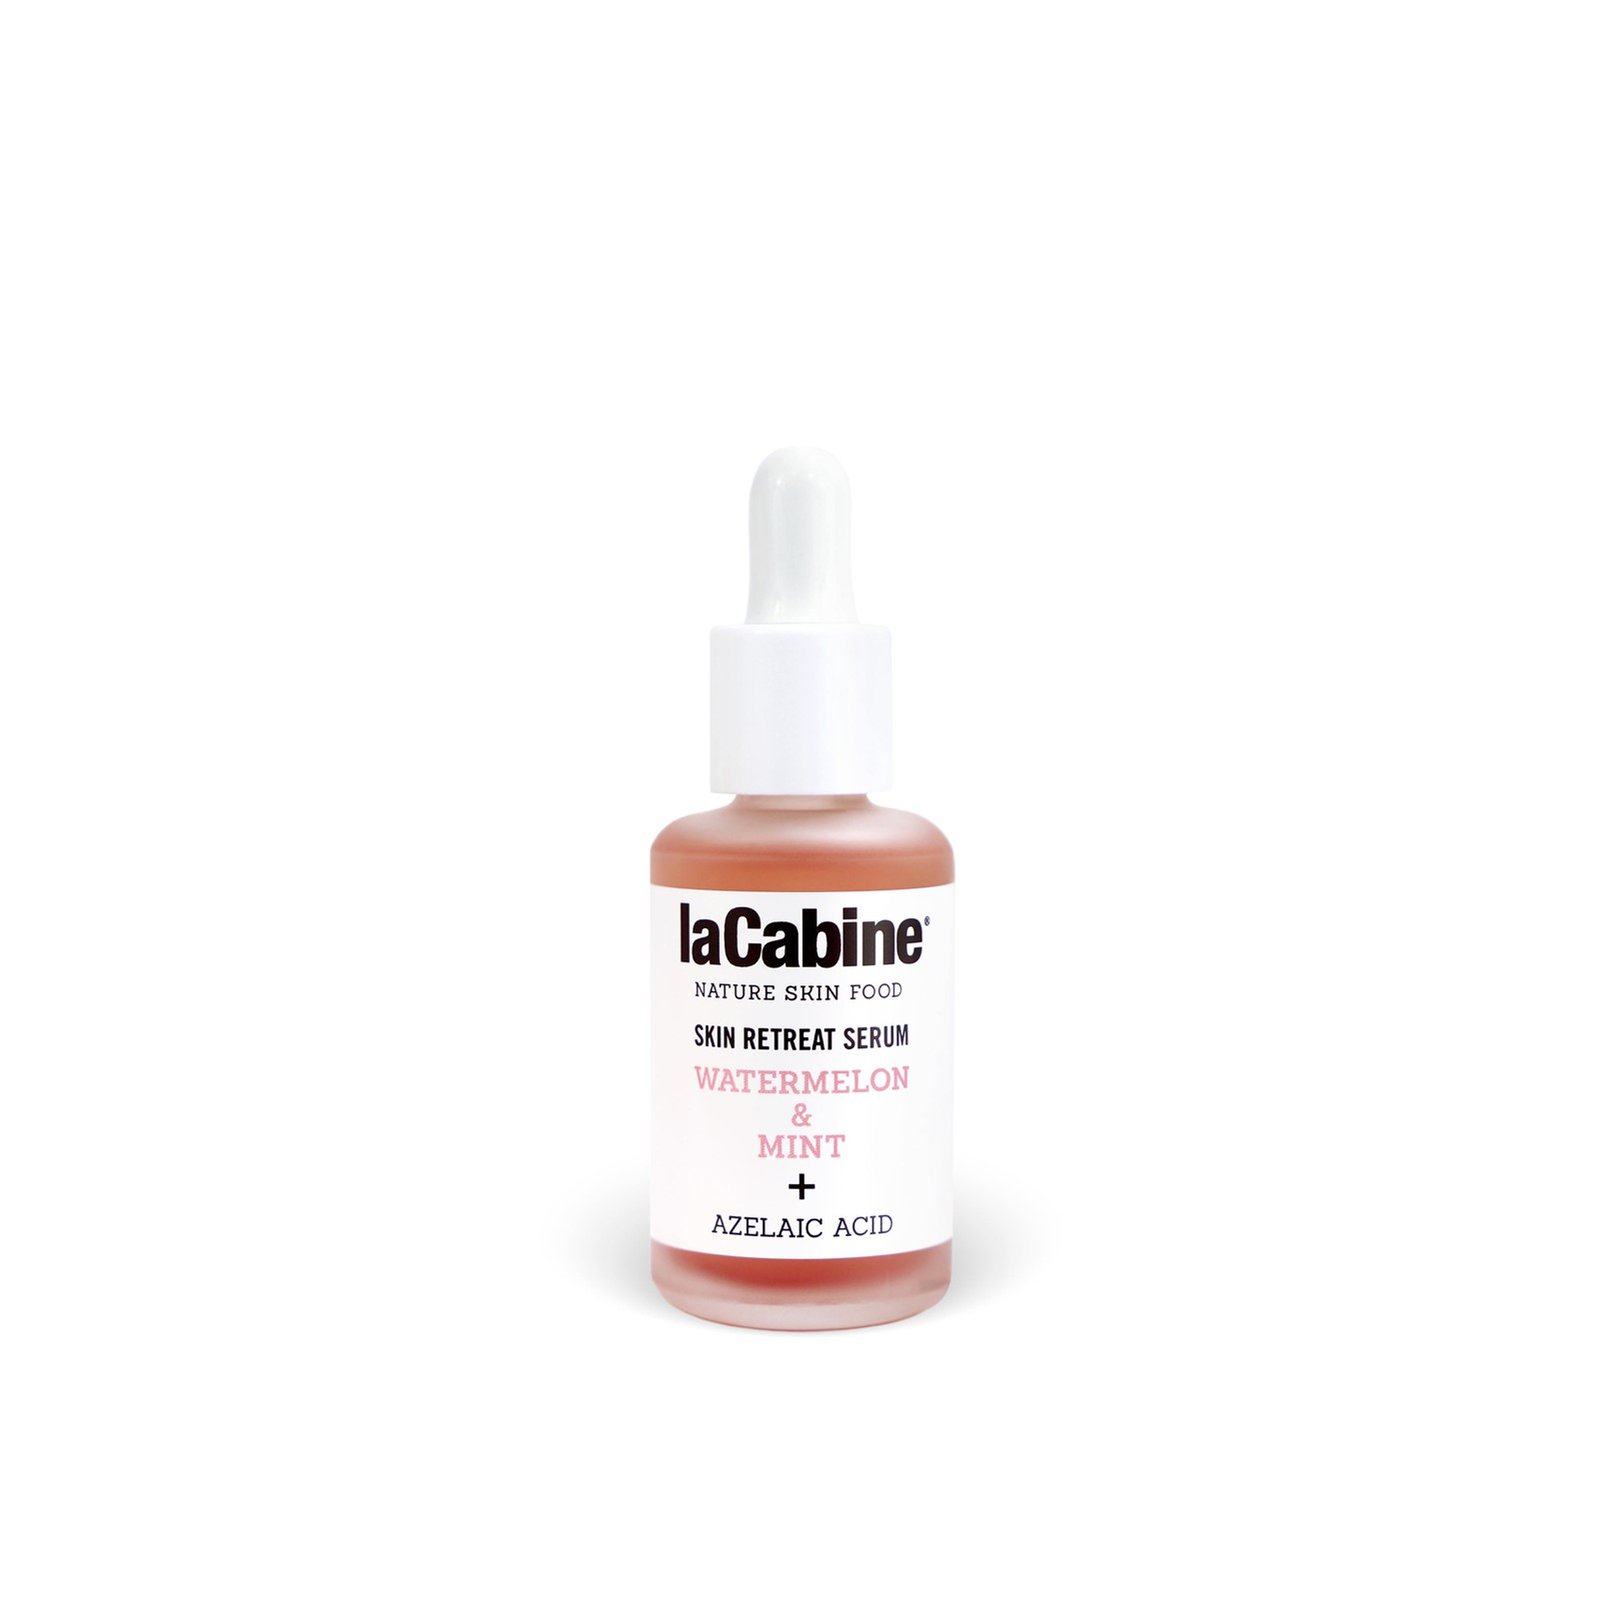 La Cabine Nature Skin Food Skin Retreat Serum 30ml (1 fl oz)